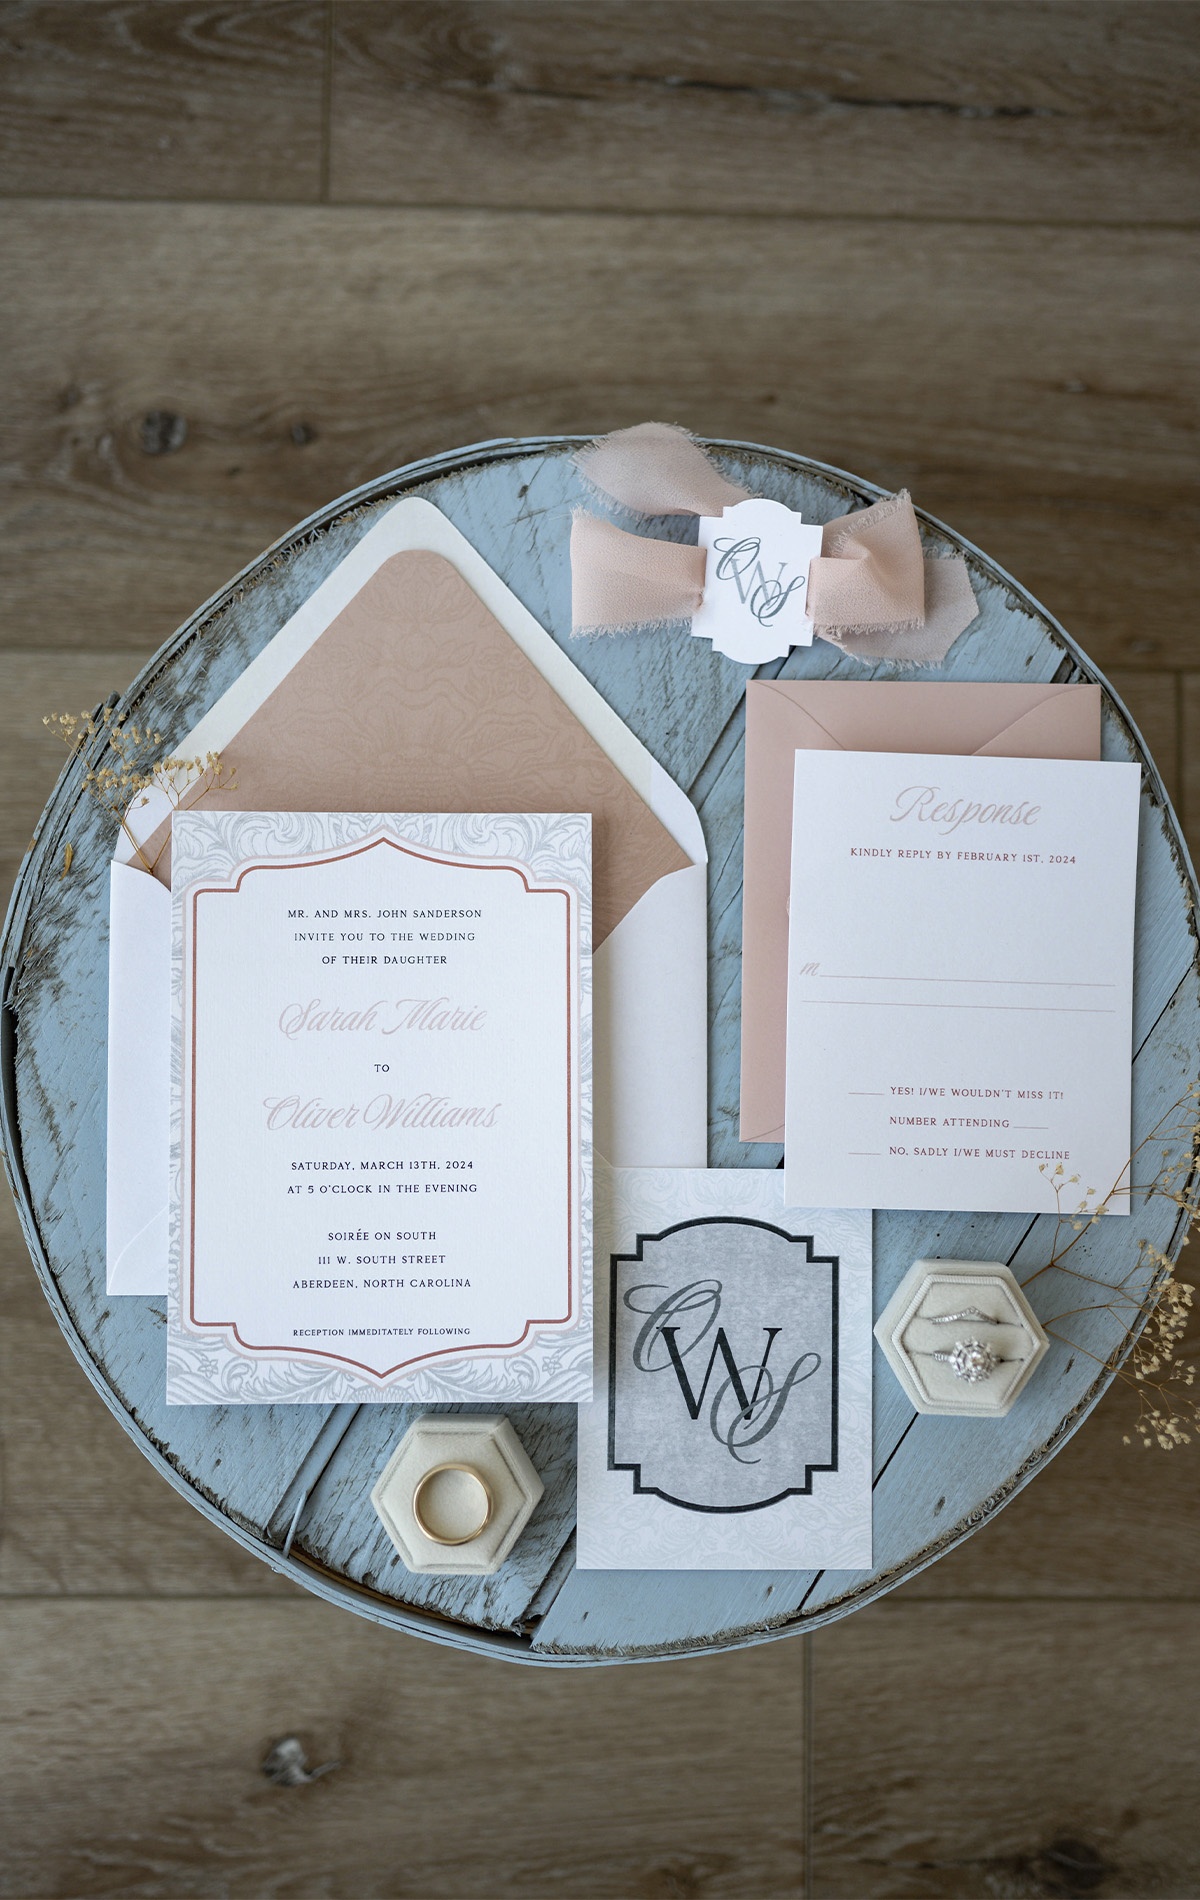 Alexis Scott - Home Website Slider Image - Delicate patterned wedding invitations